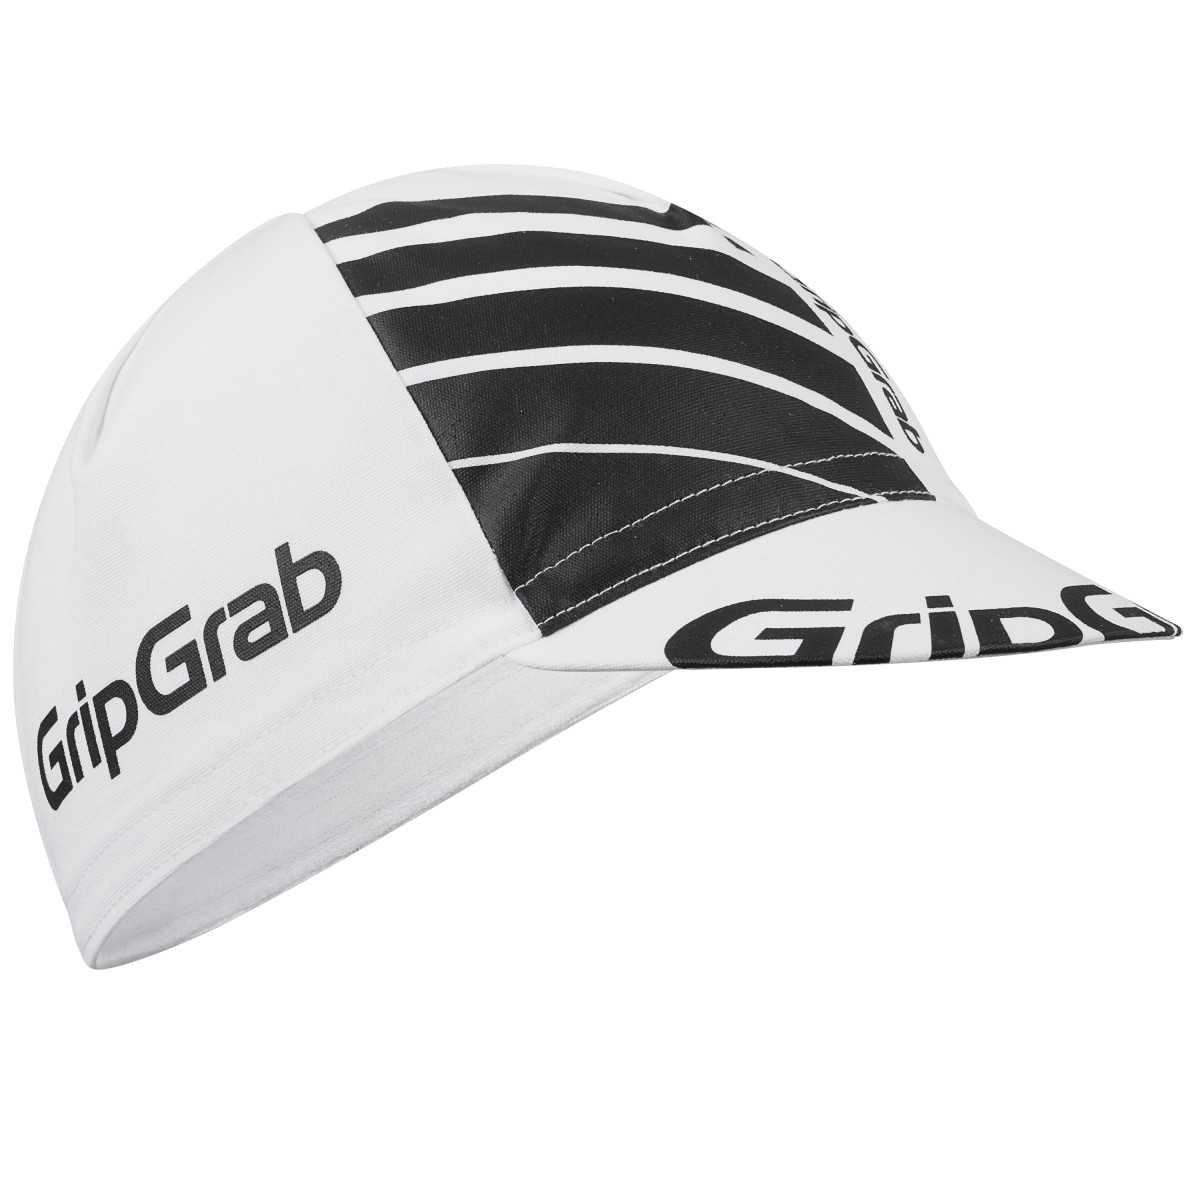 GripGrab Classic kepurė / White-Black